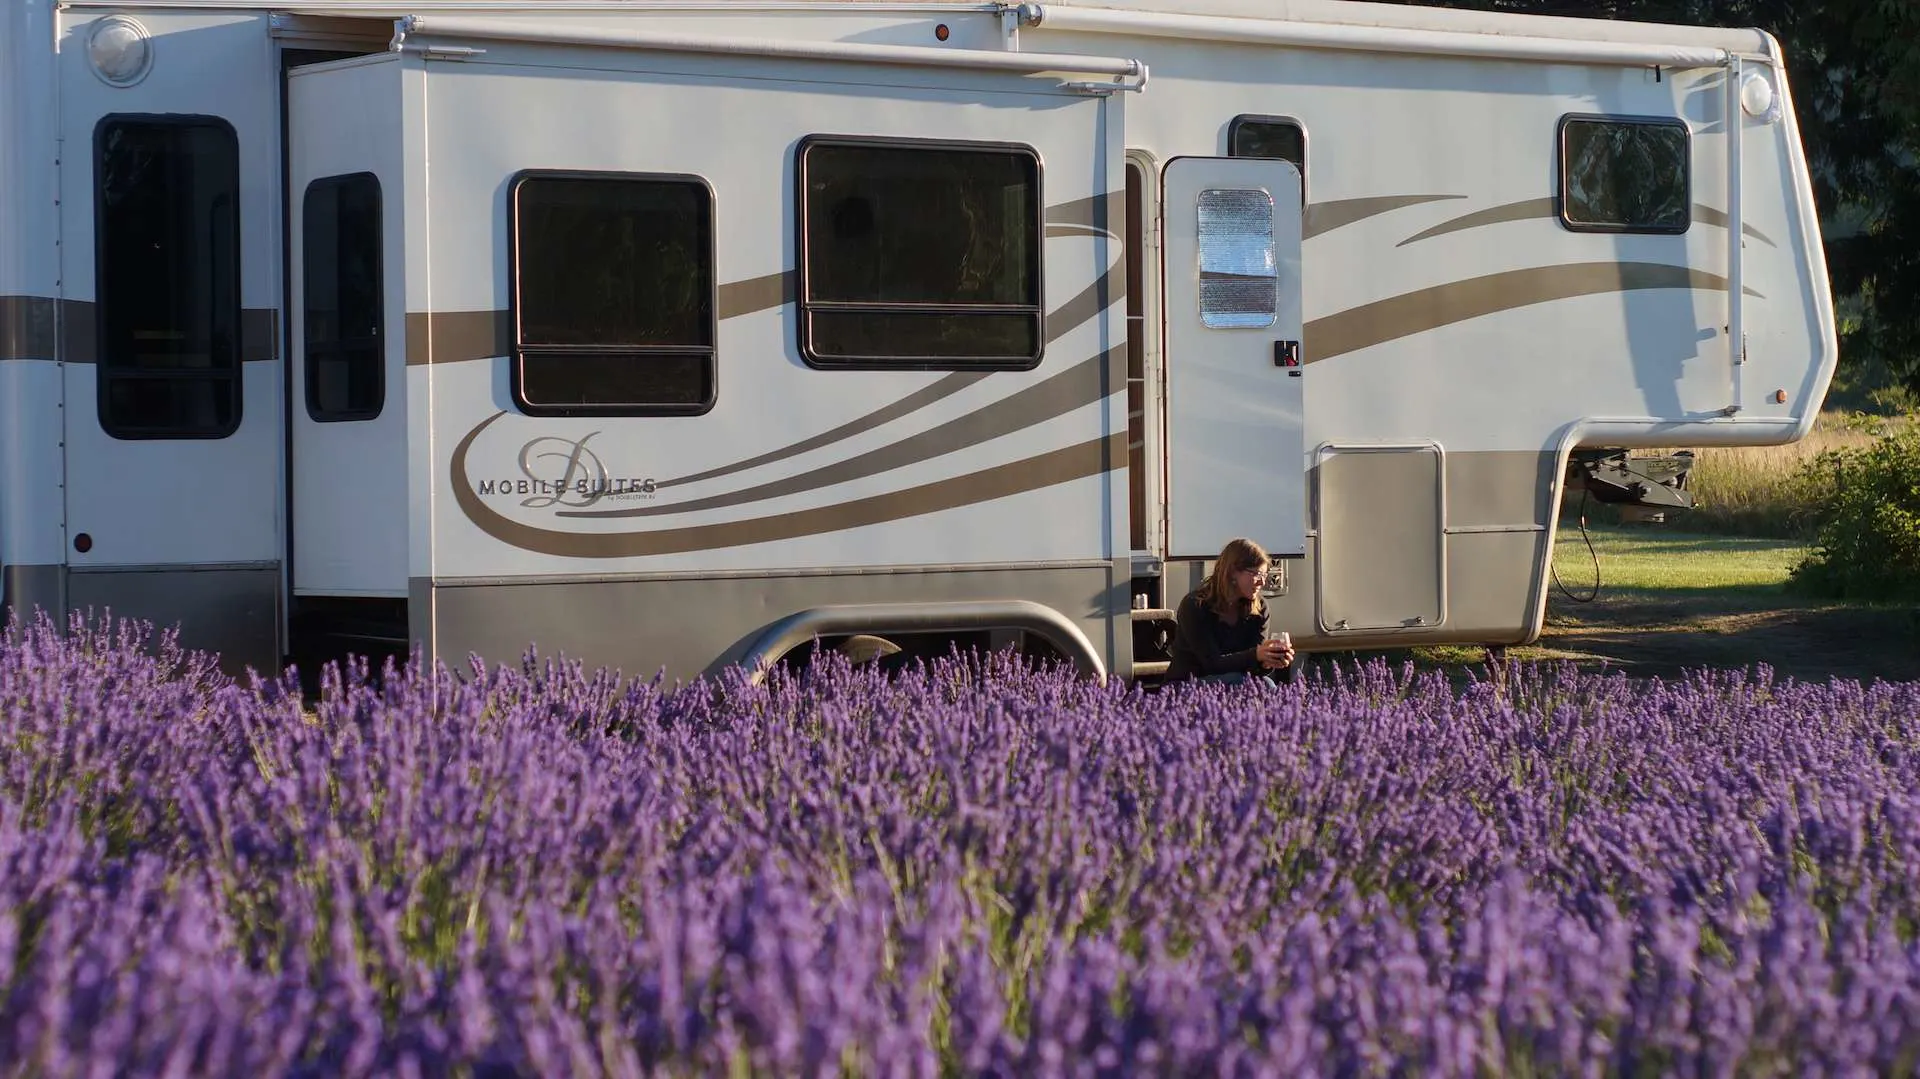 caitlin sitting on steps of drv mobile suites in lavender field